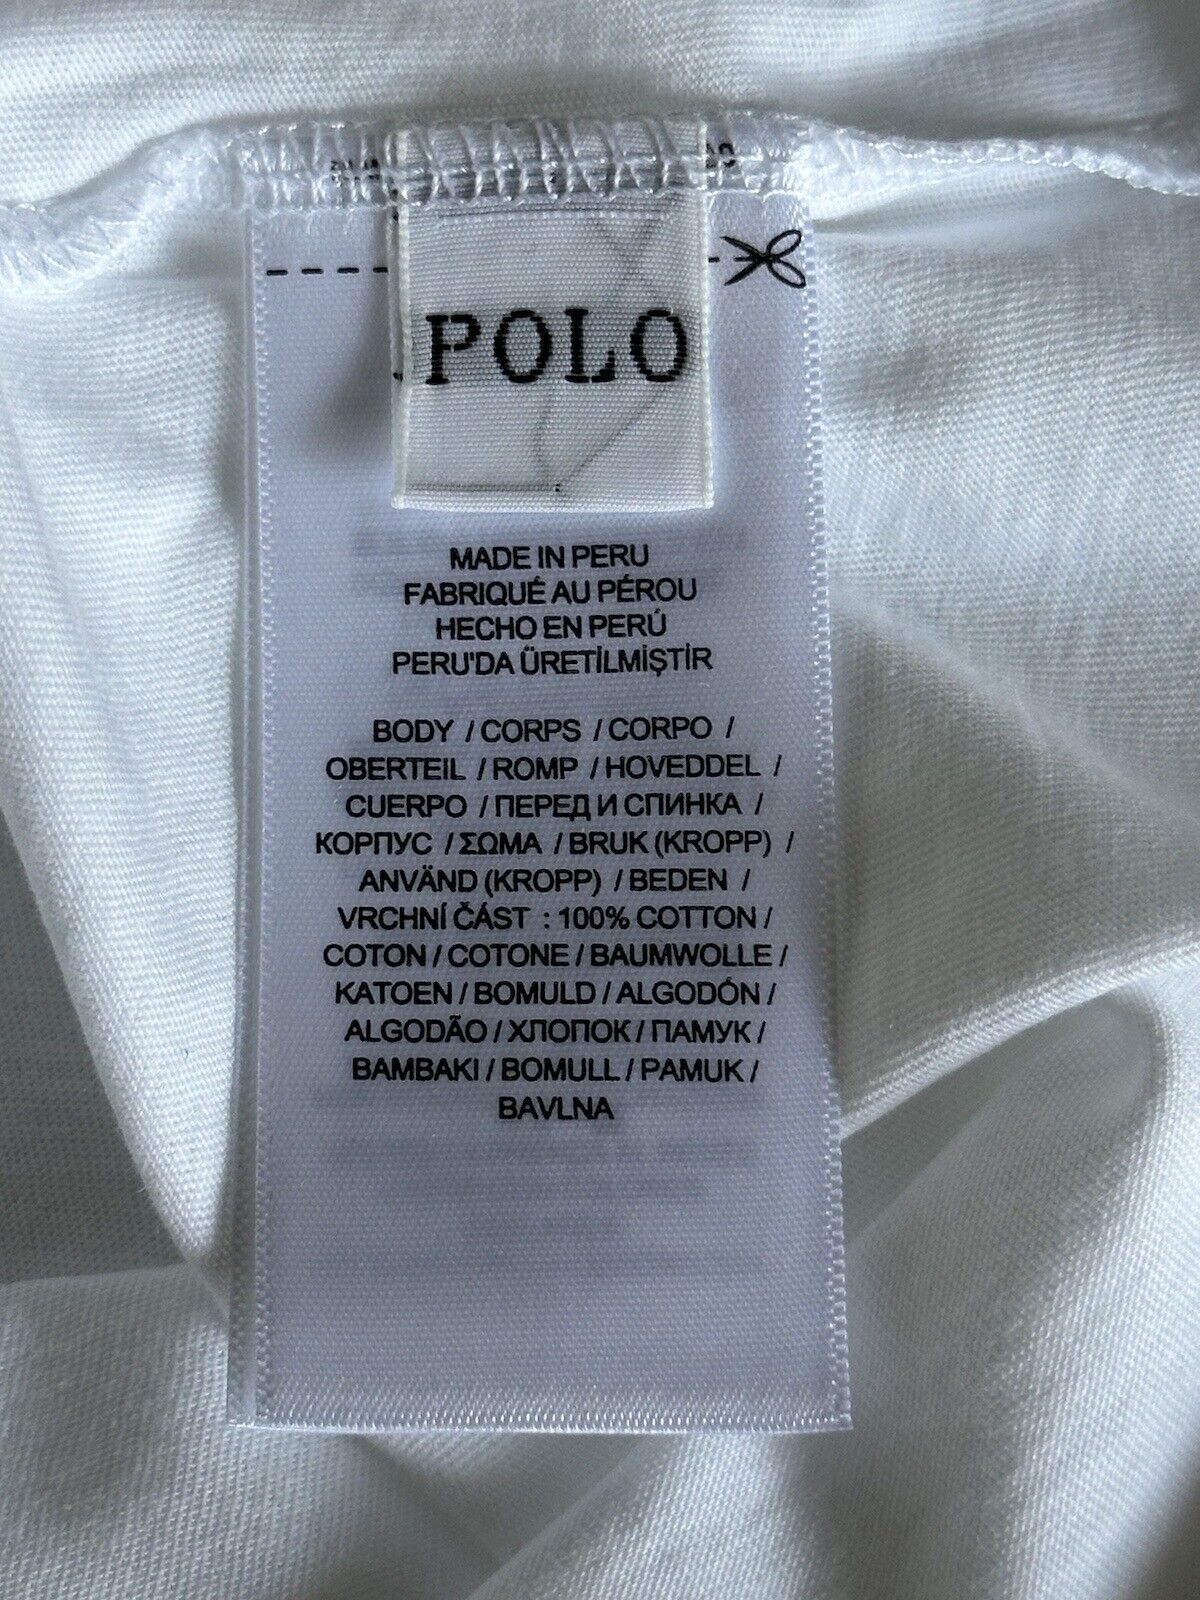 NWT $78 Polo Ralph Lauren USA Flag White Short Sleeve T-Shirt Top Medium